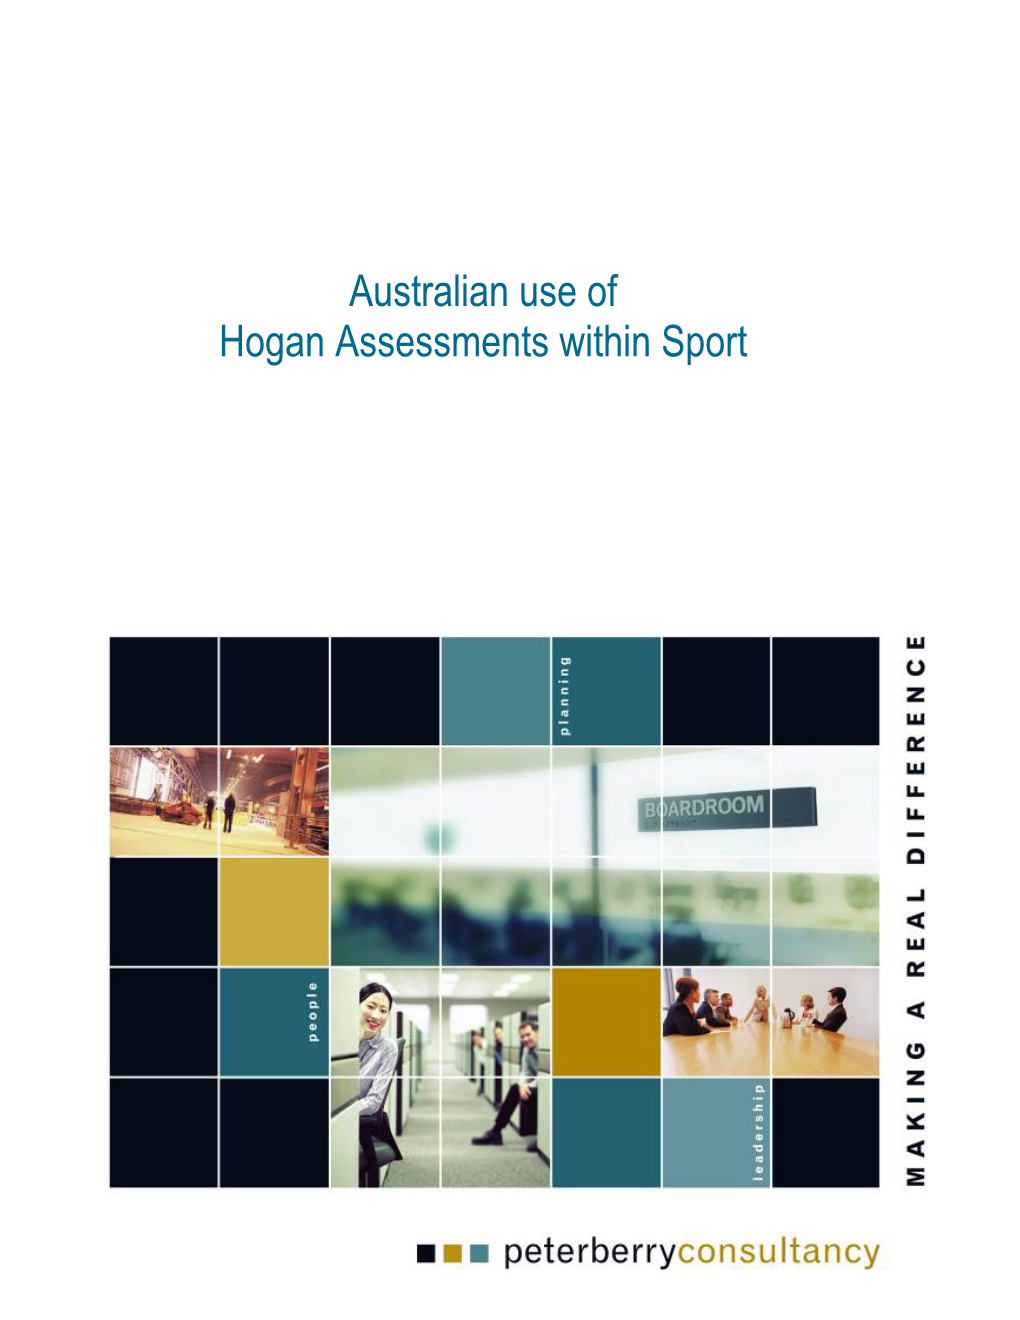 Australian Use of Hogan Assessments Within Sport